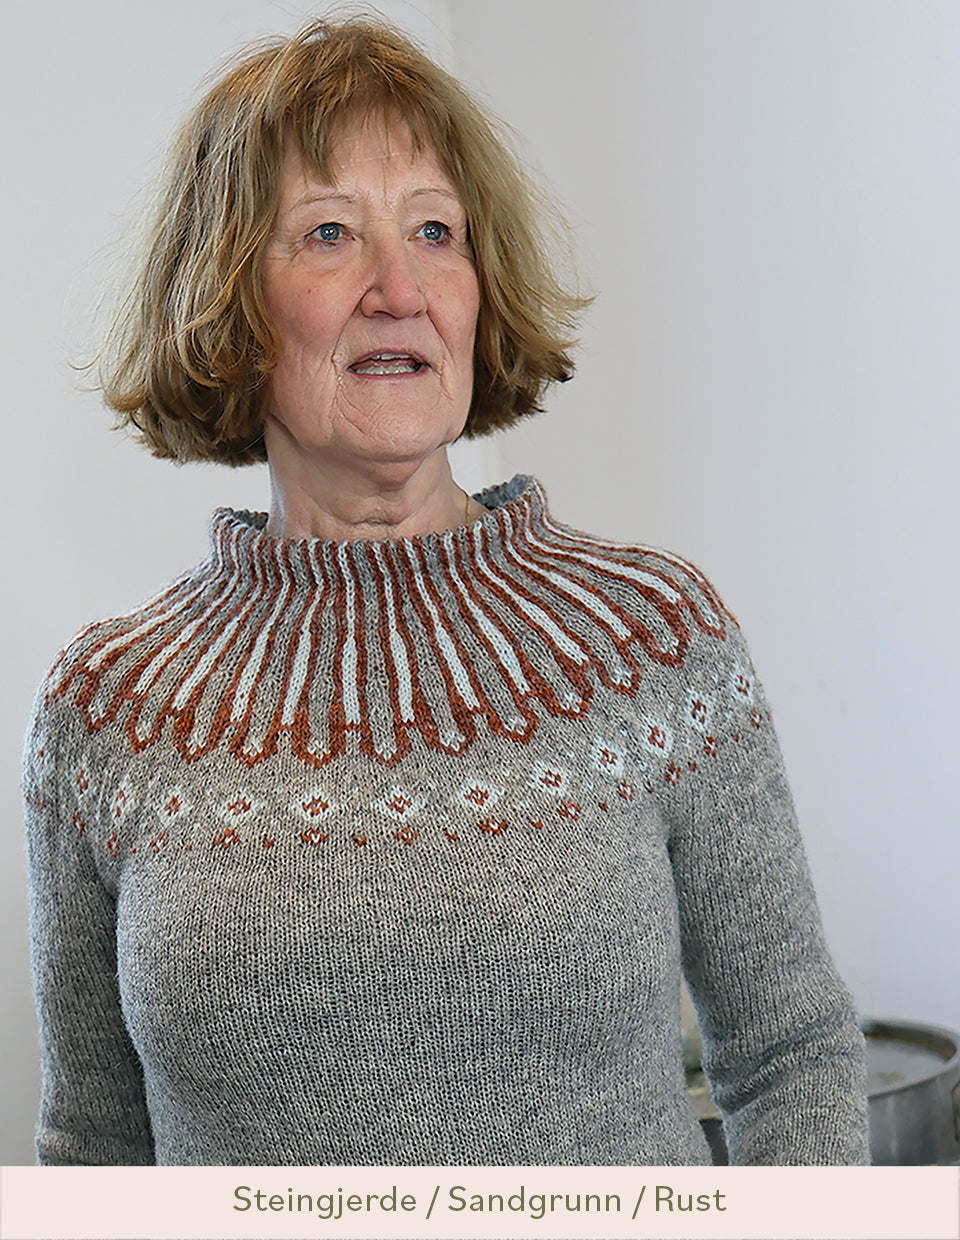 GRY, 2-ply grey sweater knitting kit